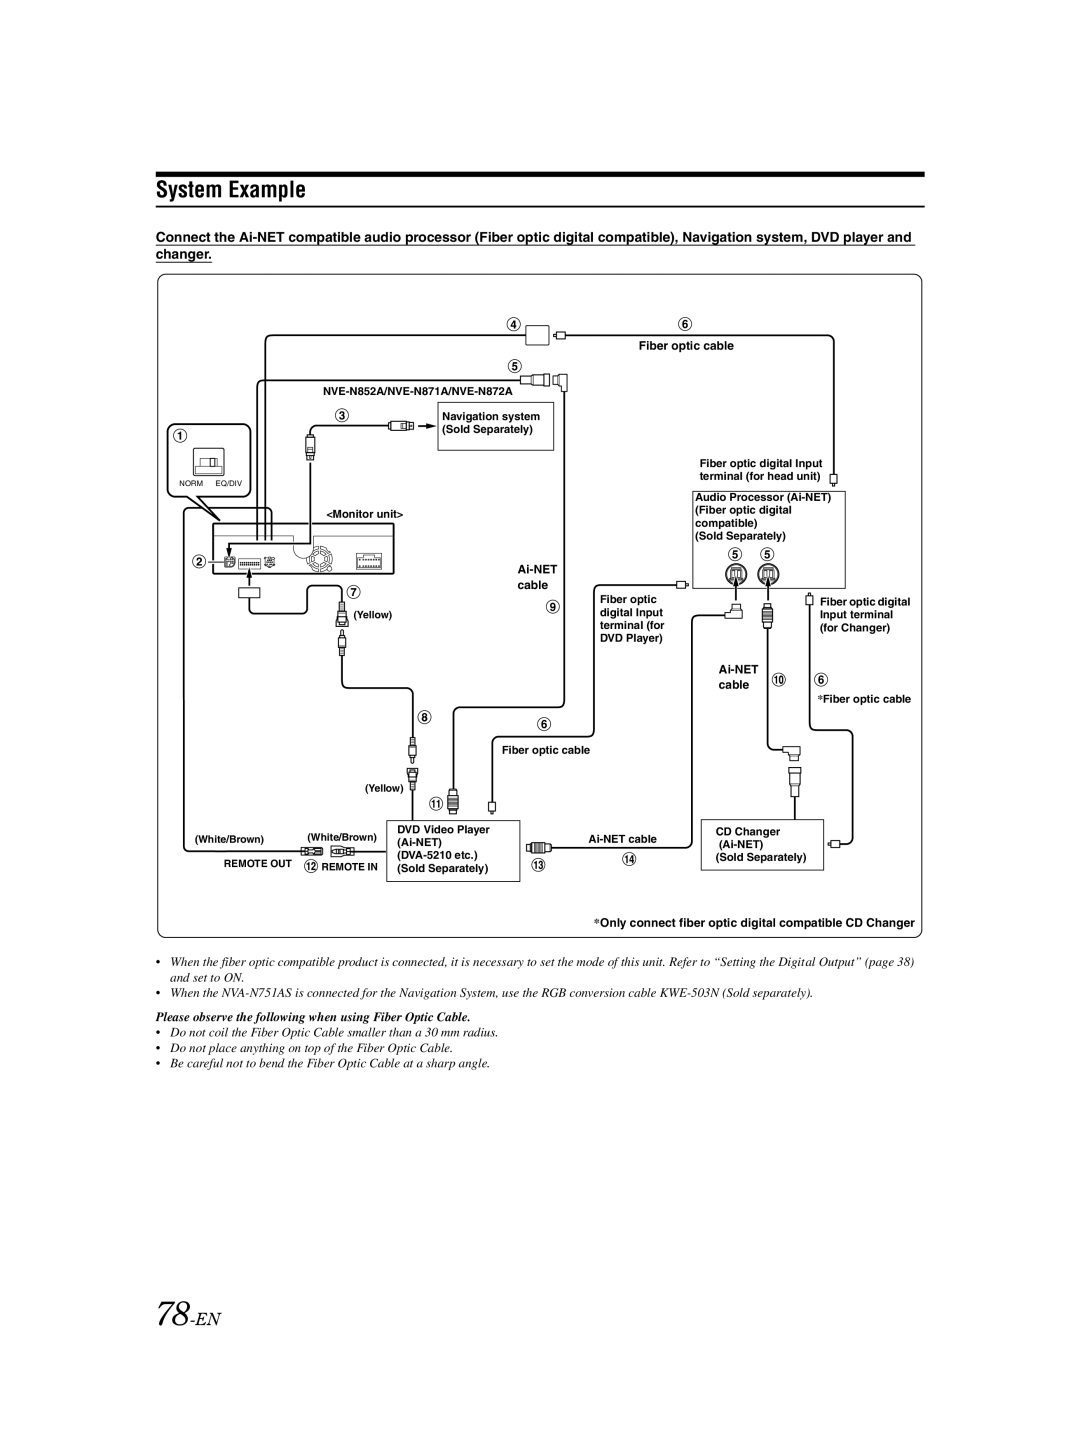 Alpine IVA-D105 owner manual System Example, 78-EN 